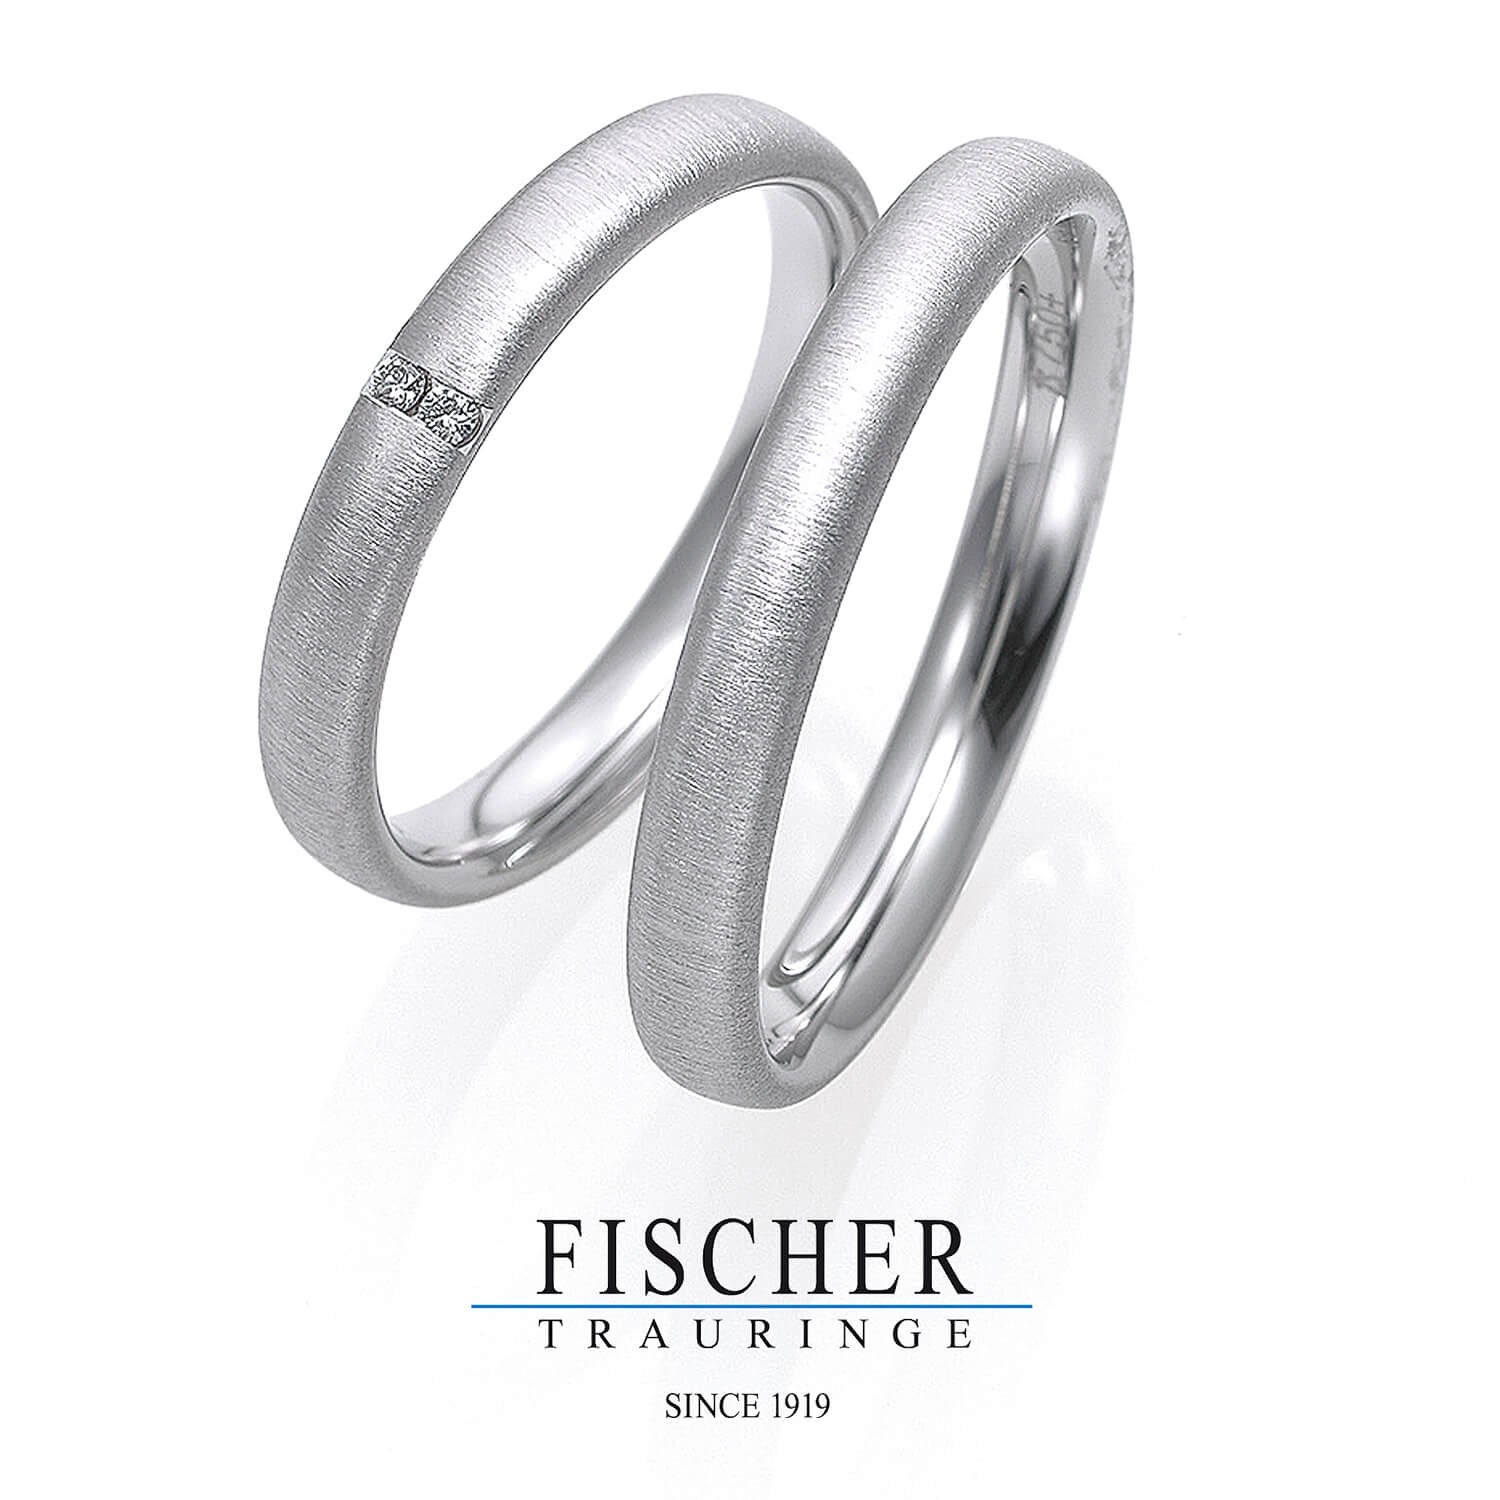 FISCHERフィッシャーの結婚指輪でWeddingRingウェディングリング9750383-030と9650383-030